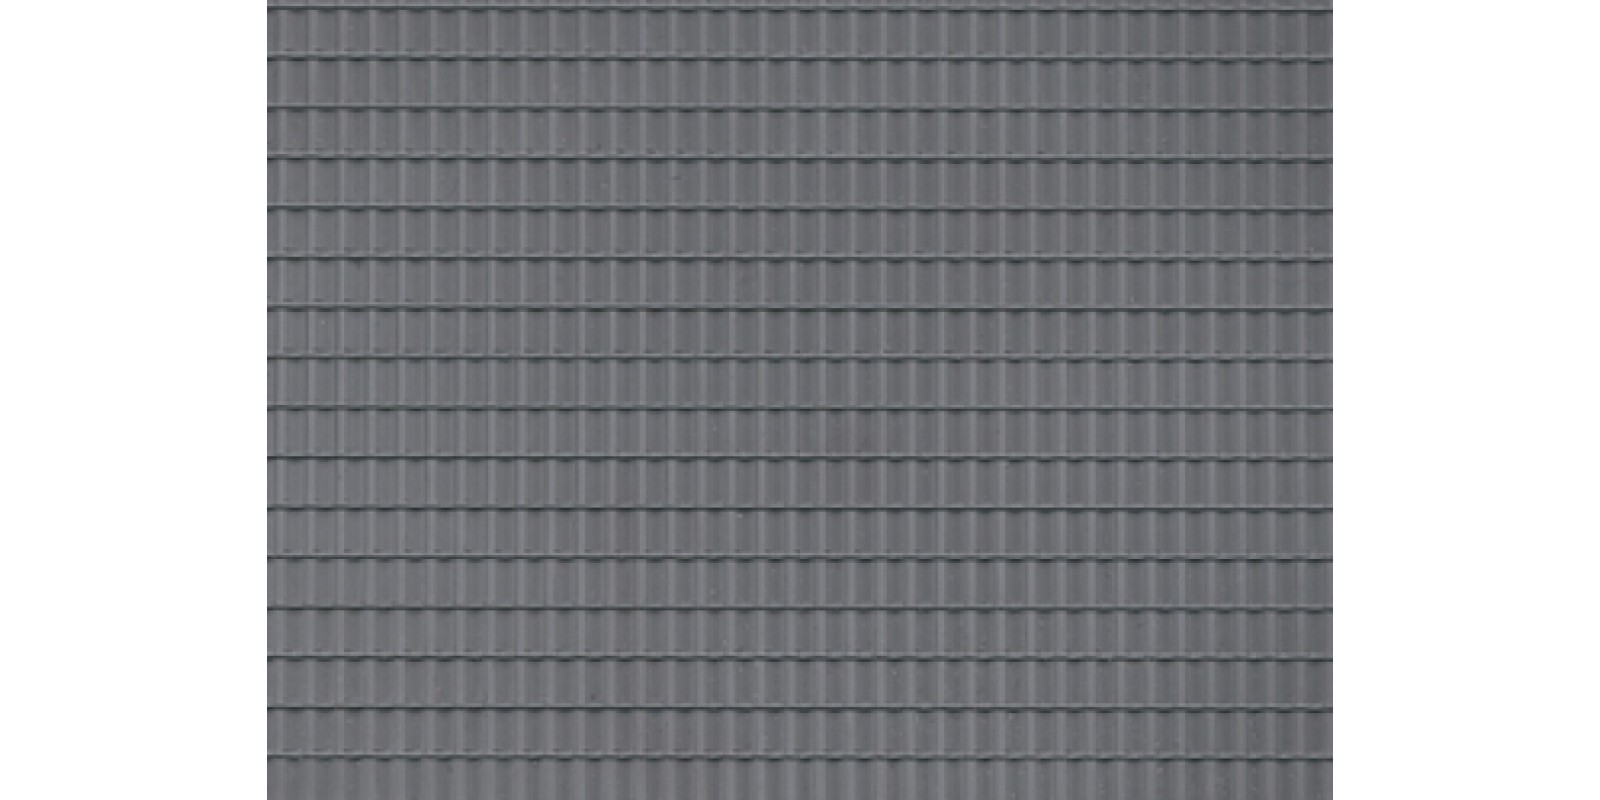 AU52426 1 roof tile dark grey single